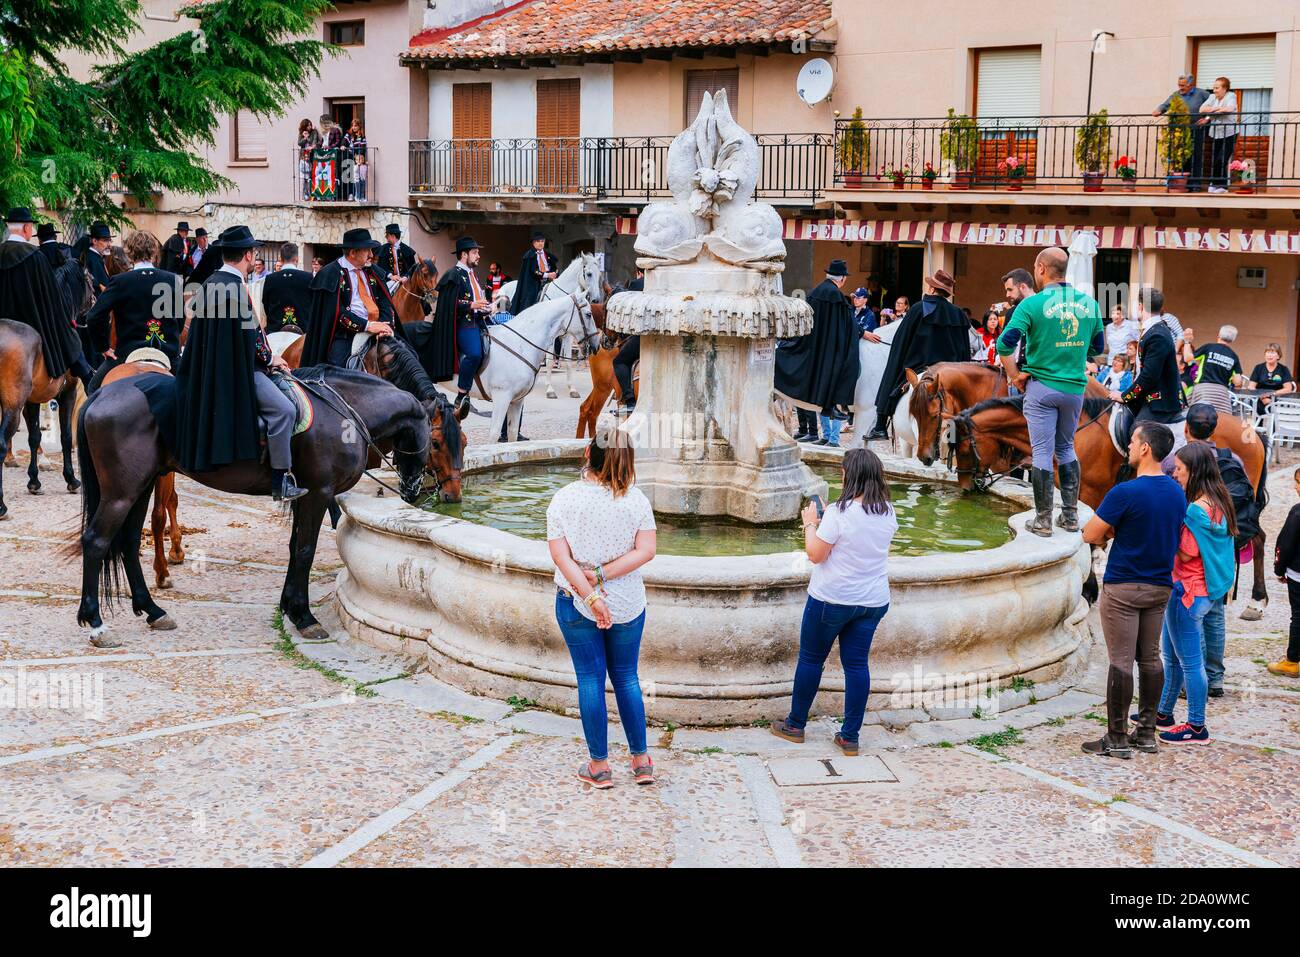 Les chevaux boivent de la fontaine de la Plaza de España. Fête 'la Caballada'. La Fraternité de la Sainte Trinité. Atienza, Guadalajara, Castilla la Ma Banque D'Images